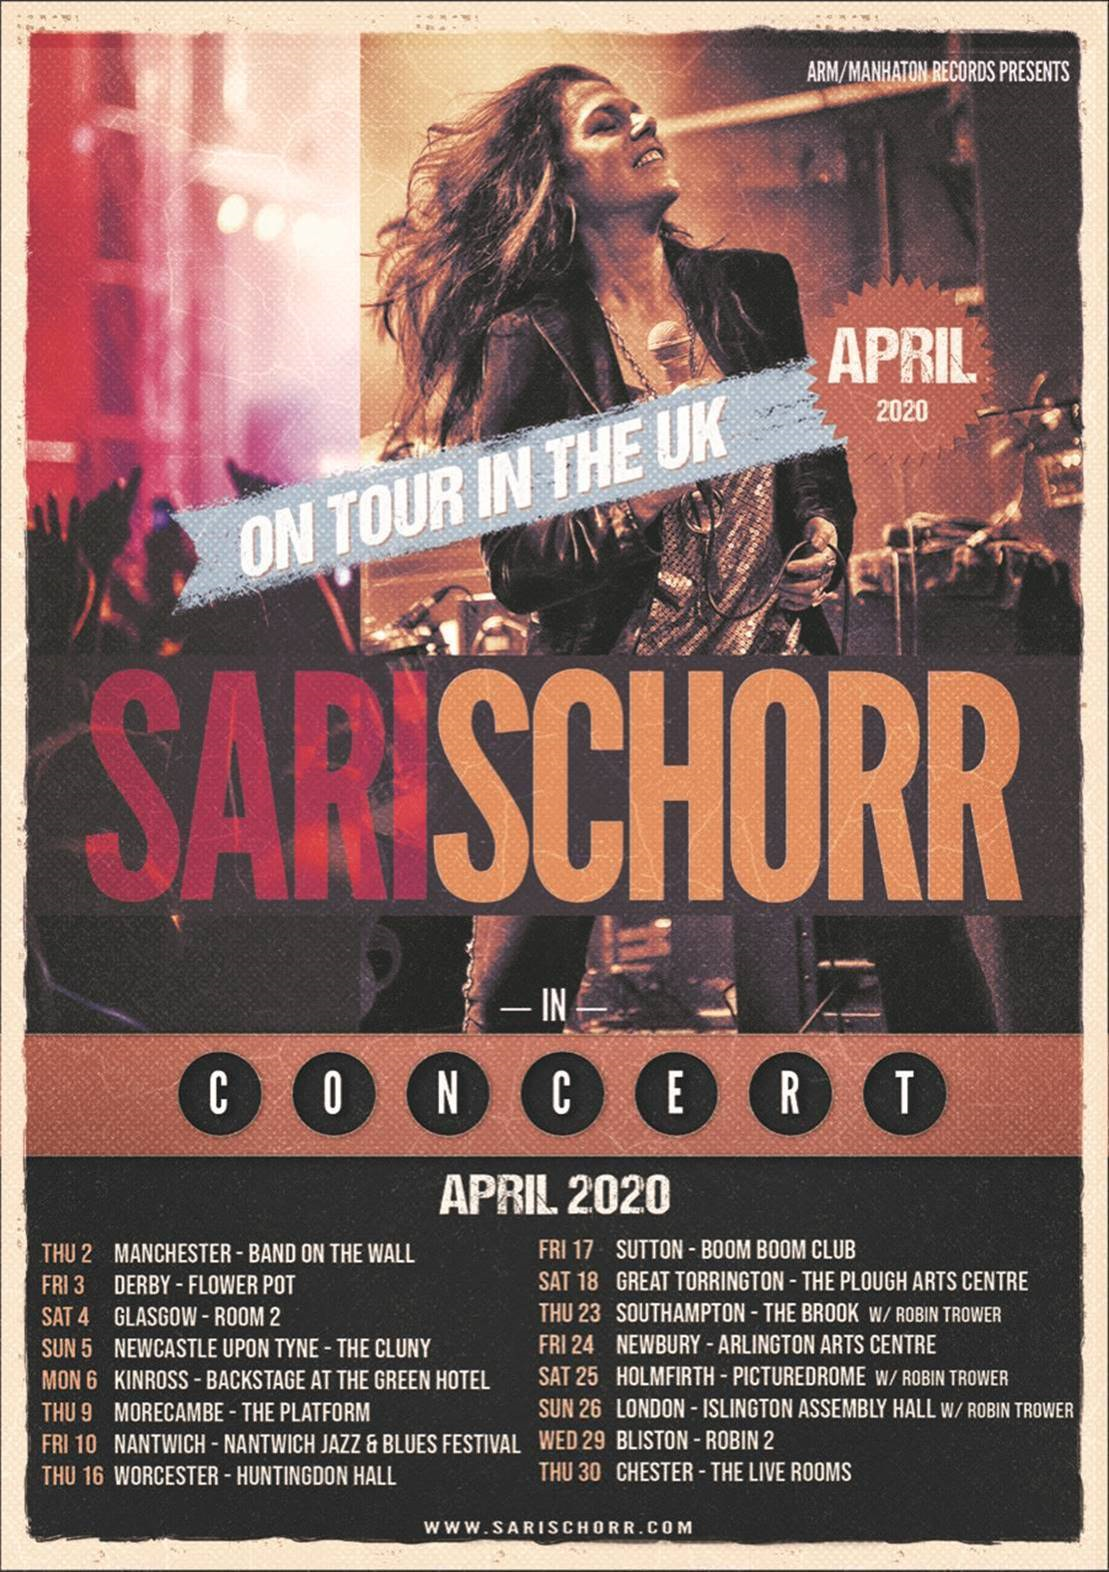 Sari Schorr tour